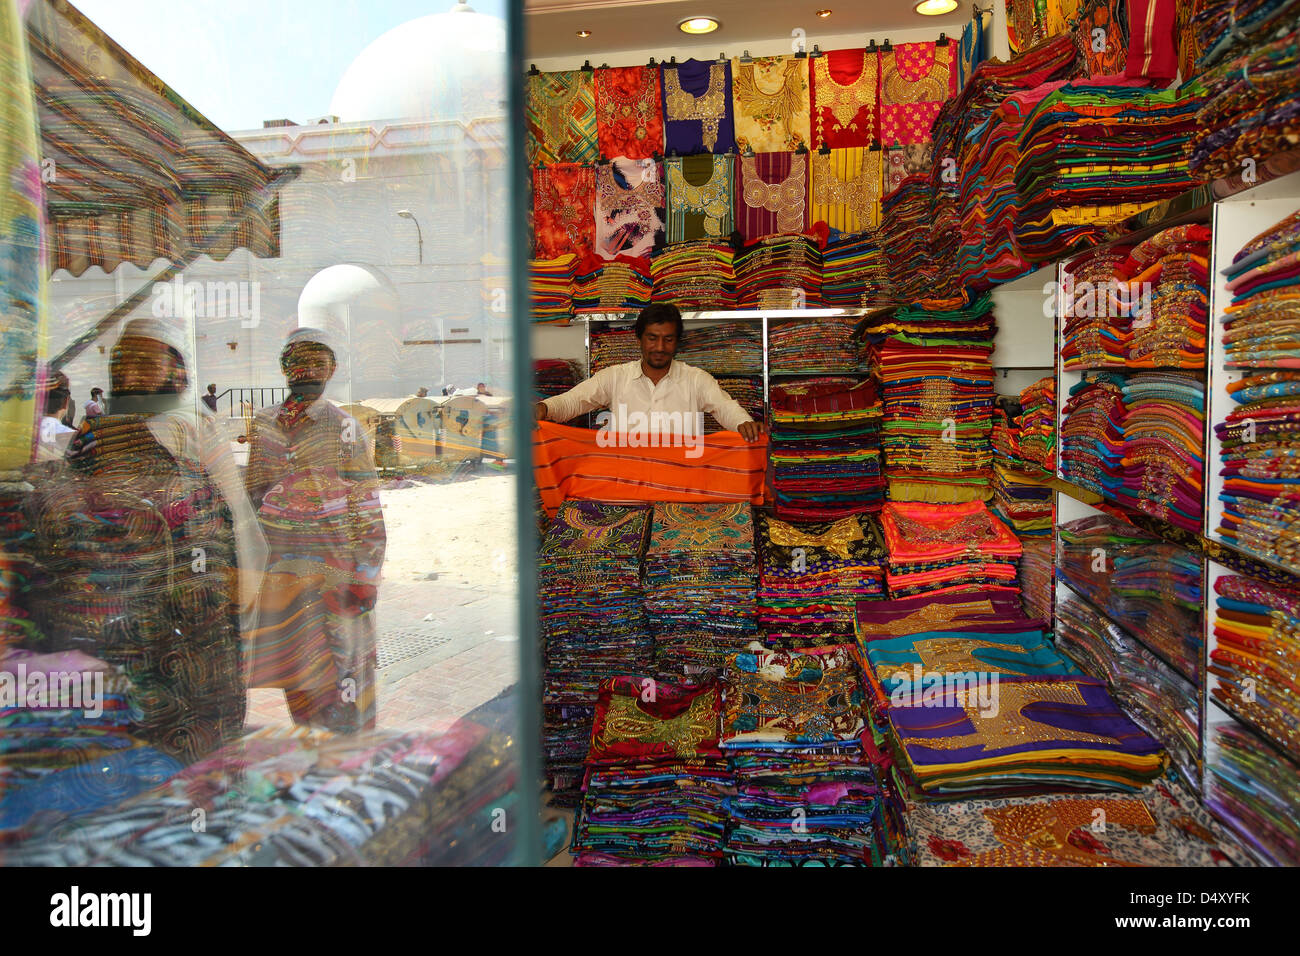 Man folding fabric in textile shop, Dubai, United Arab Emirates Stock Photo